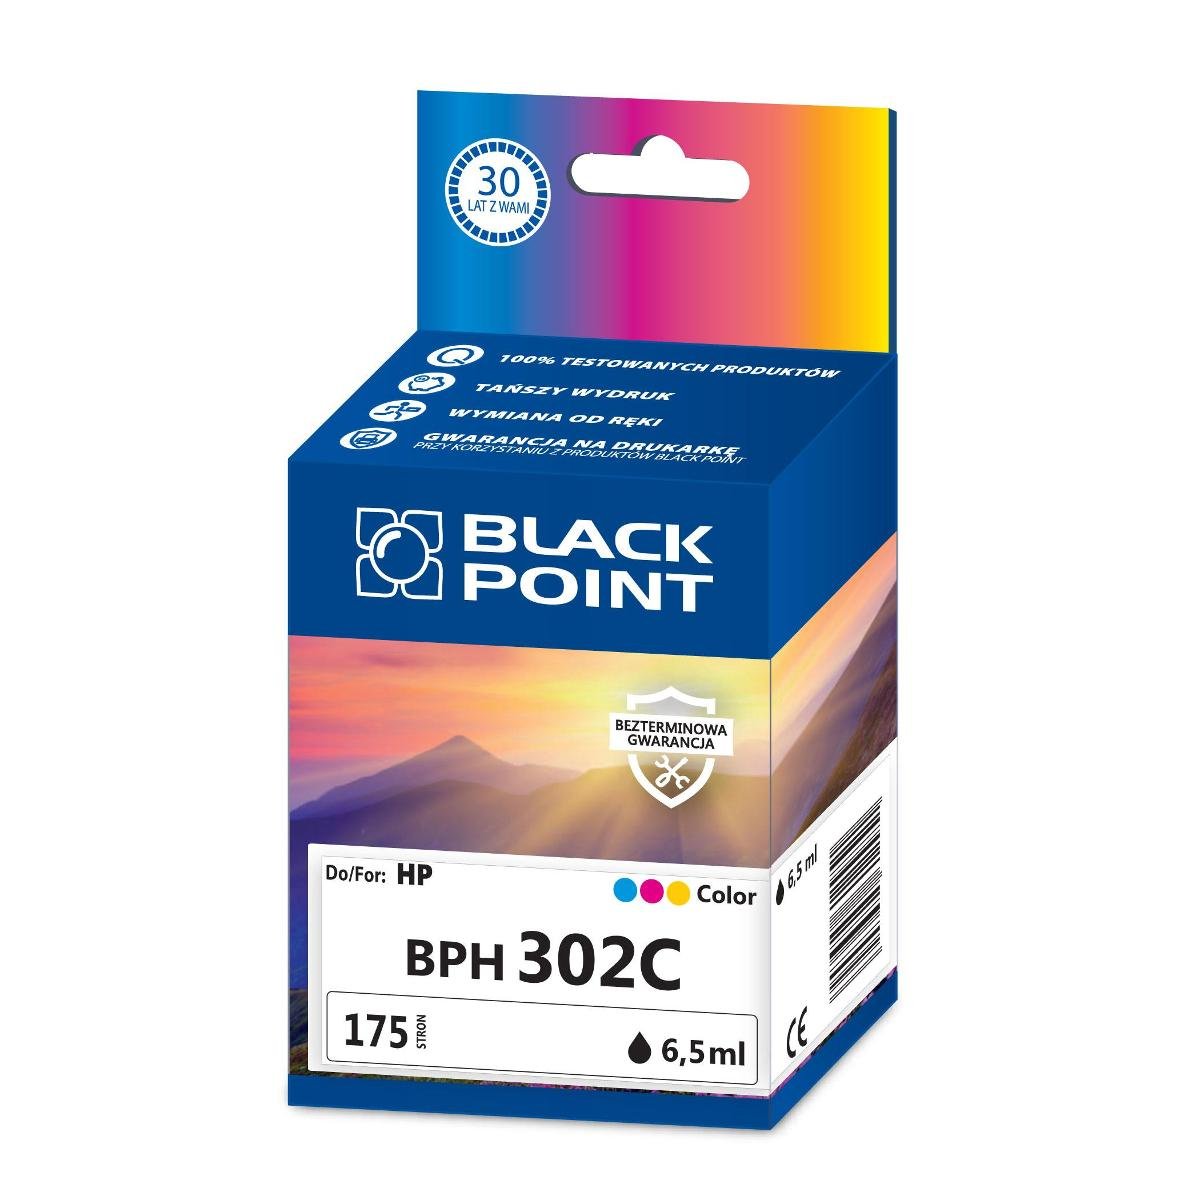 BlackPoint BPH302C zamiennik HP F6U65AE trójkolorowy BPH302C